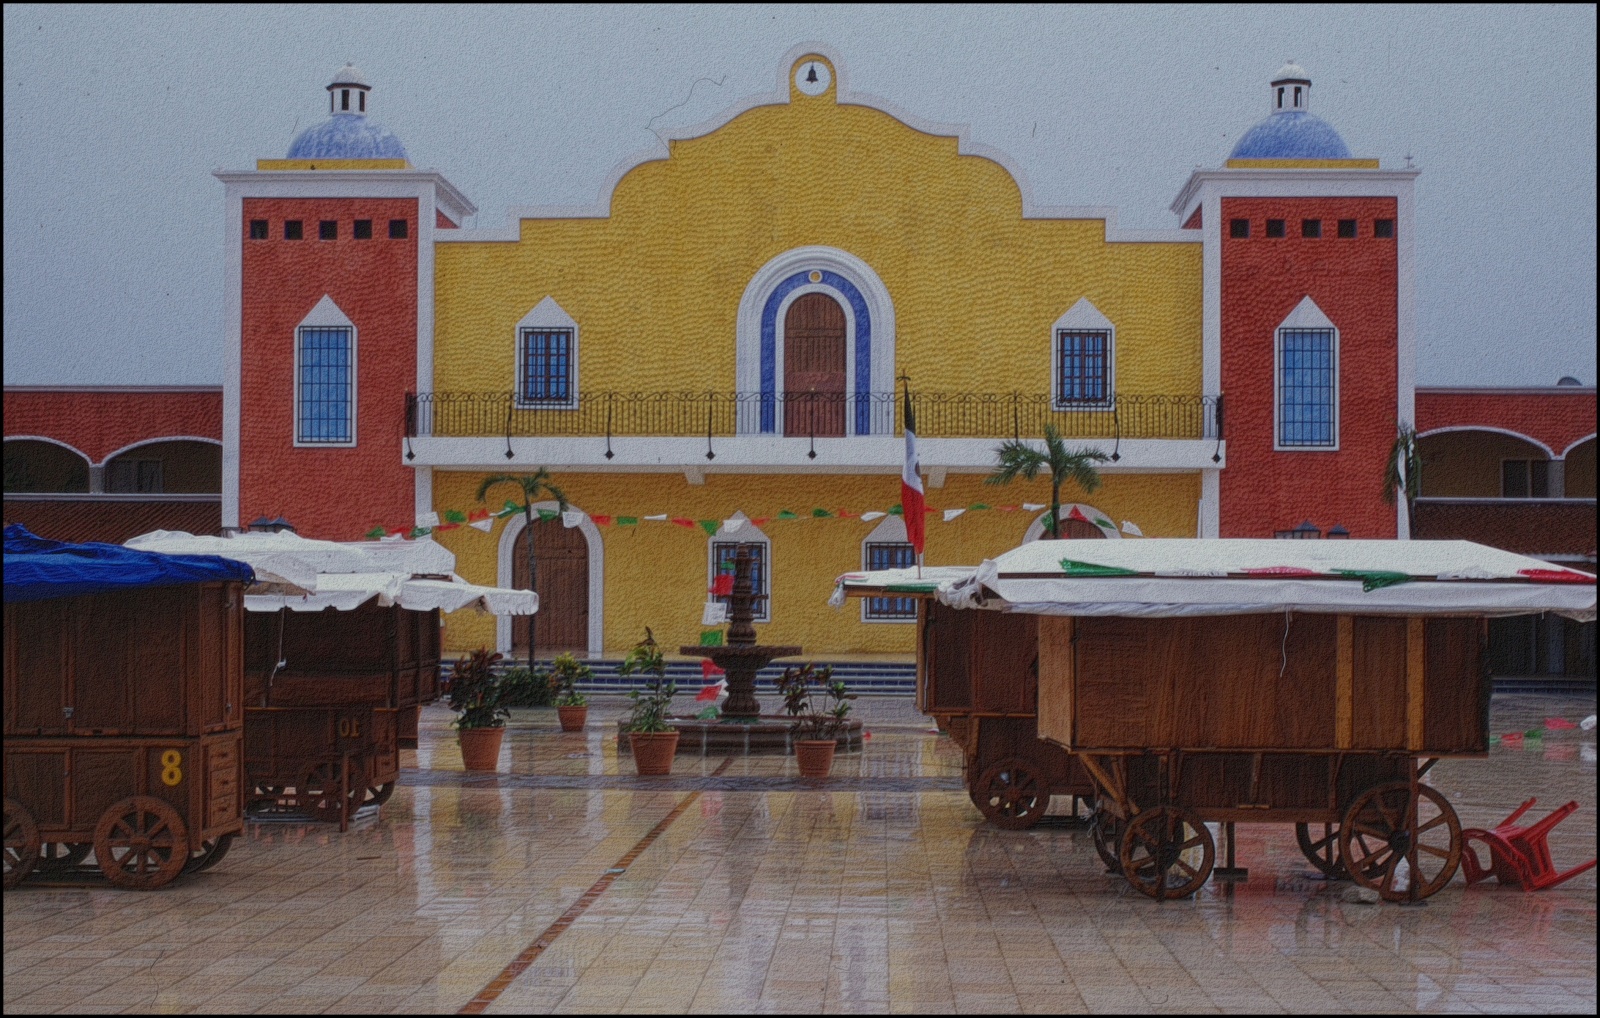 Messico 2000